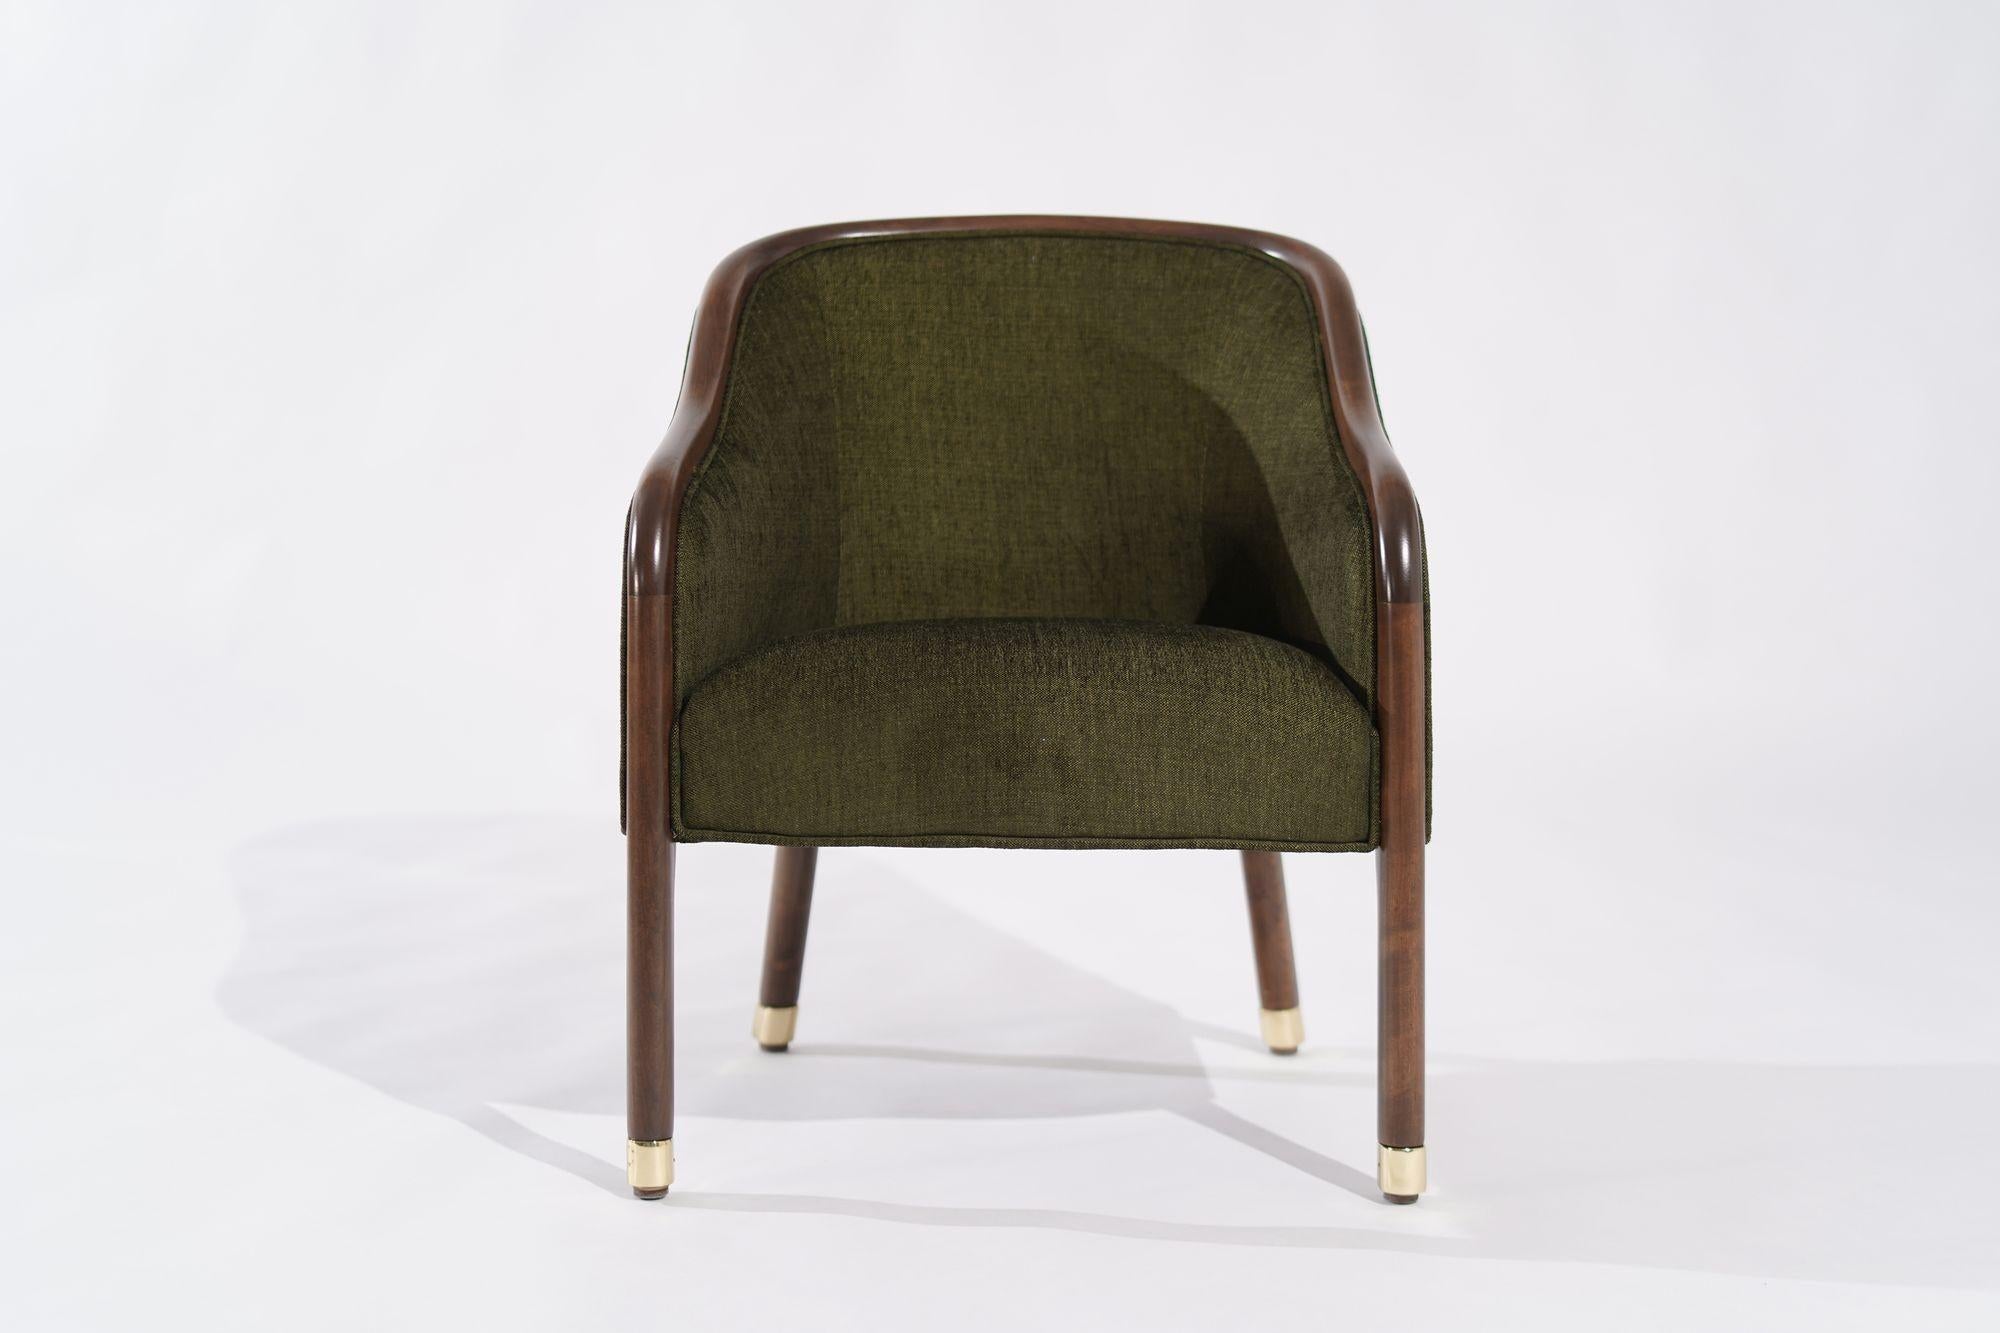 Brass Ward Bennett Walnut Frame Lounge Chairs, C. 1970s For Sale